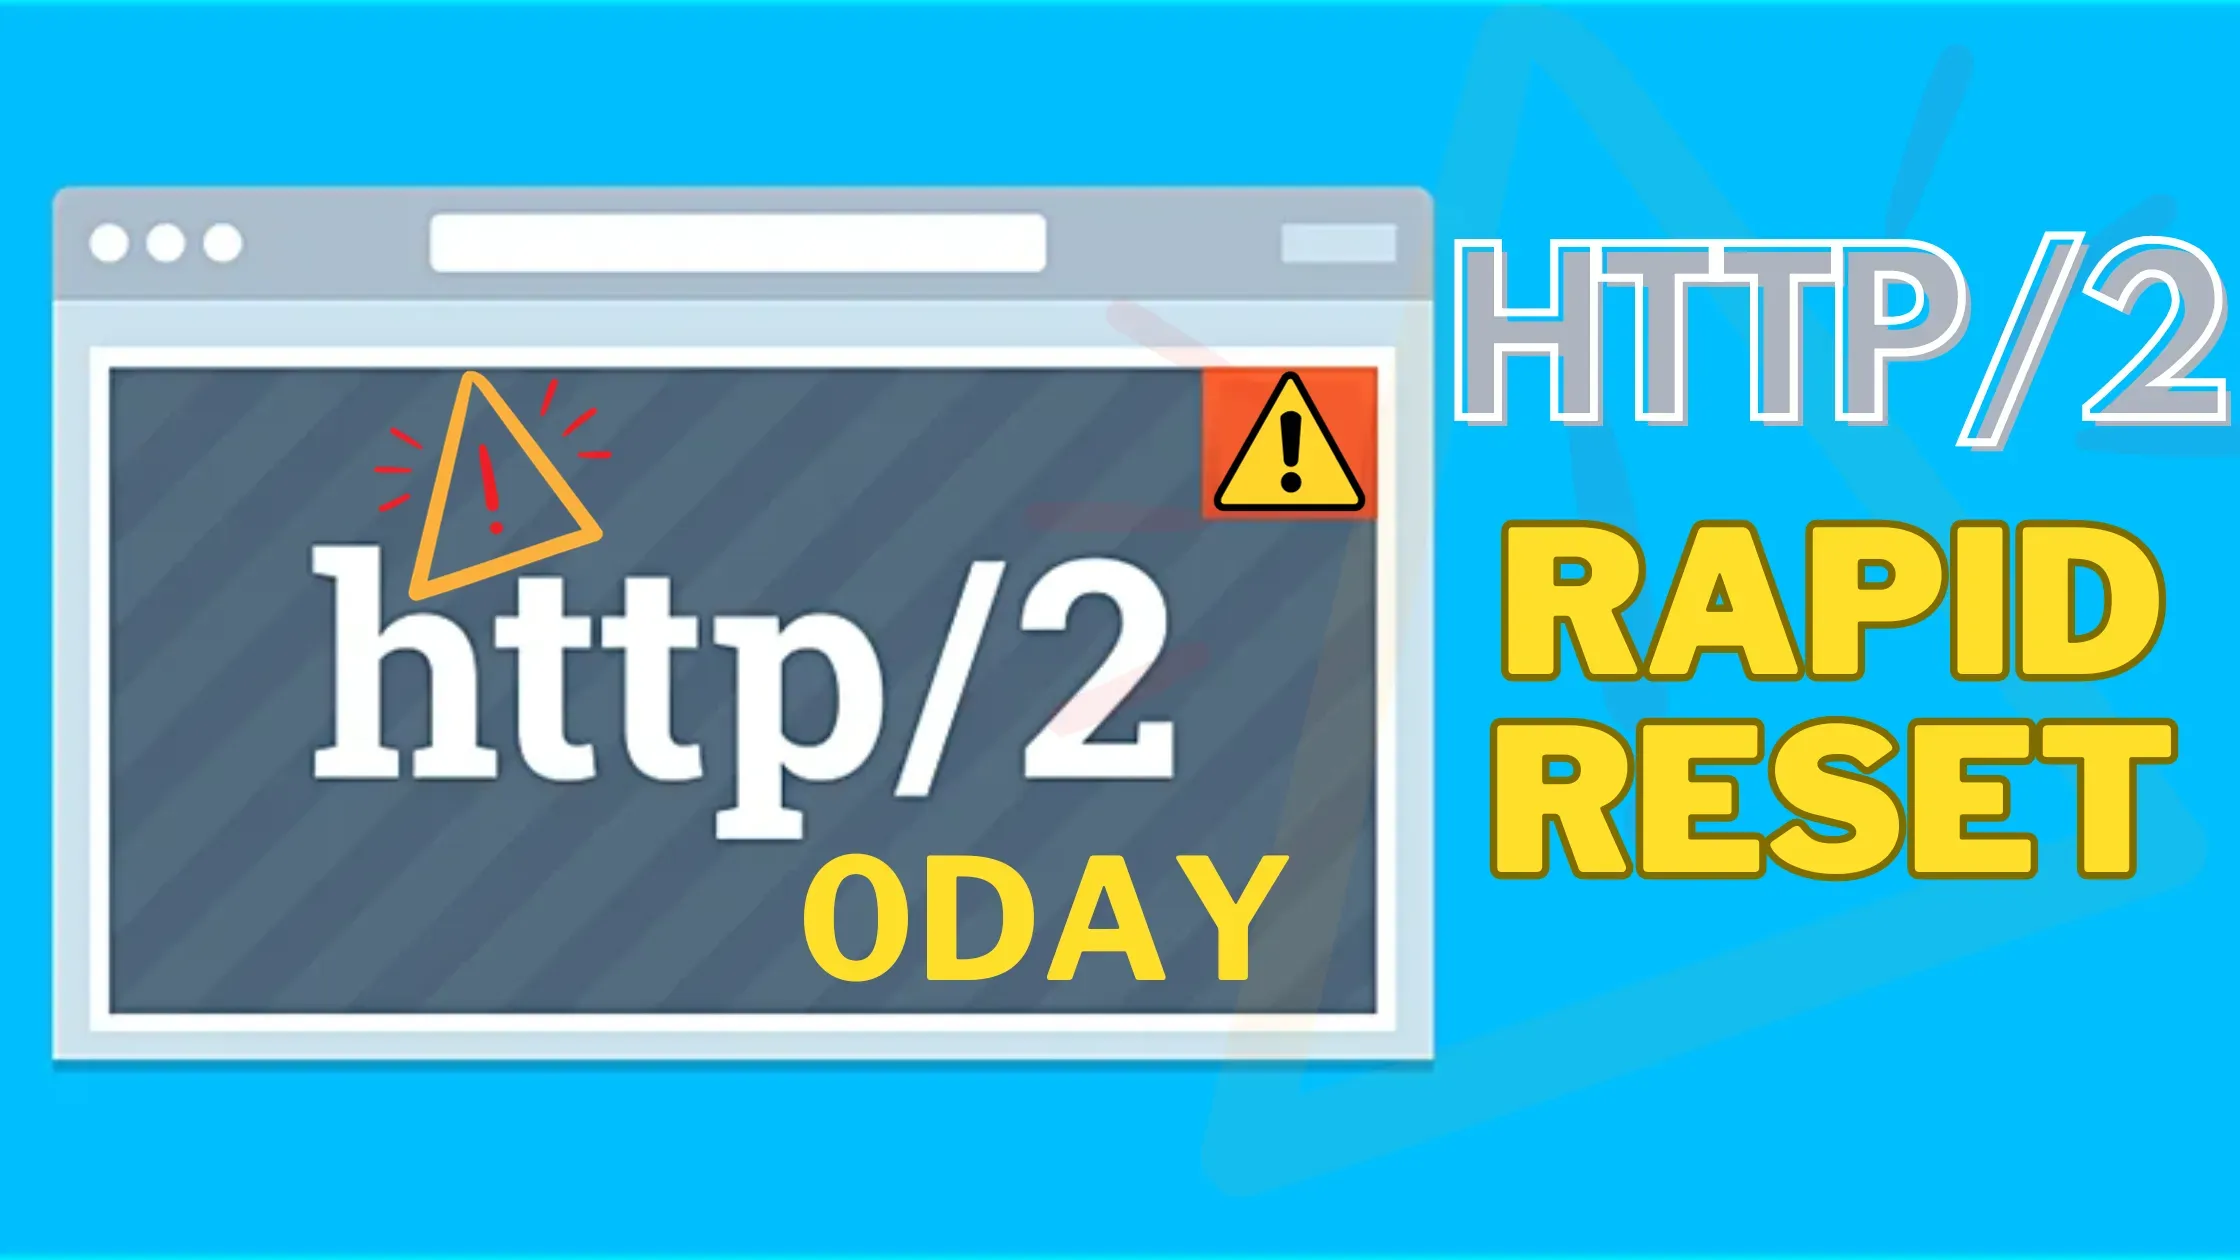 HTTP/2 Rapid Reset Attack